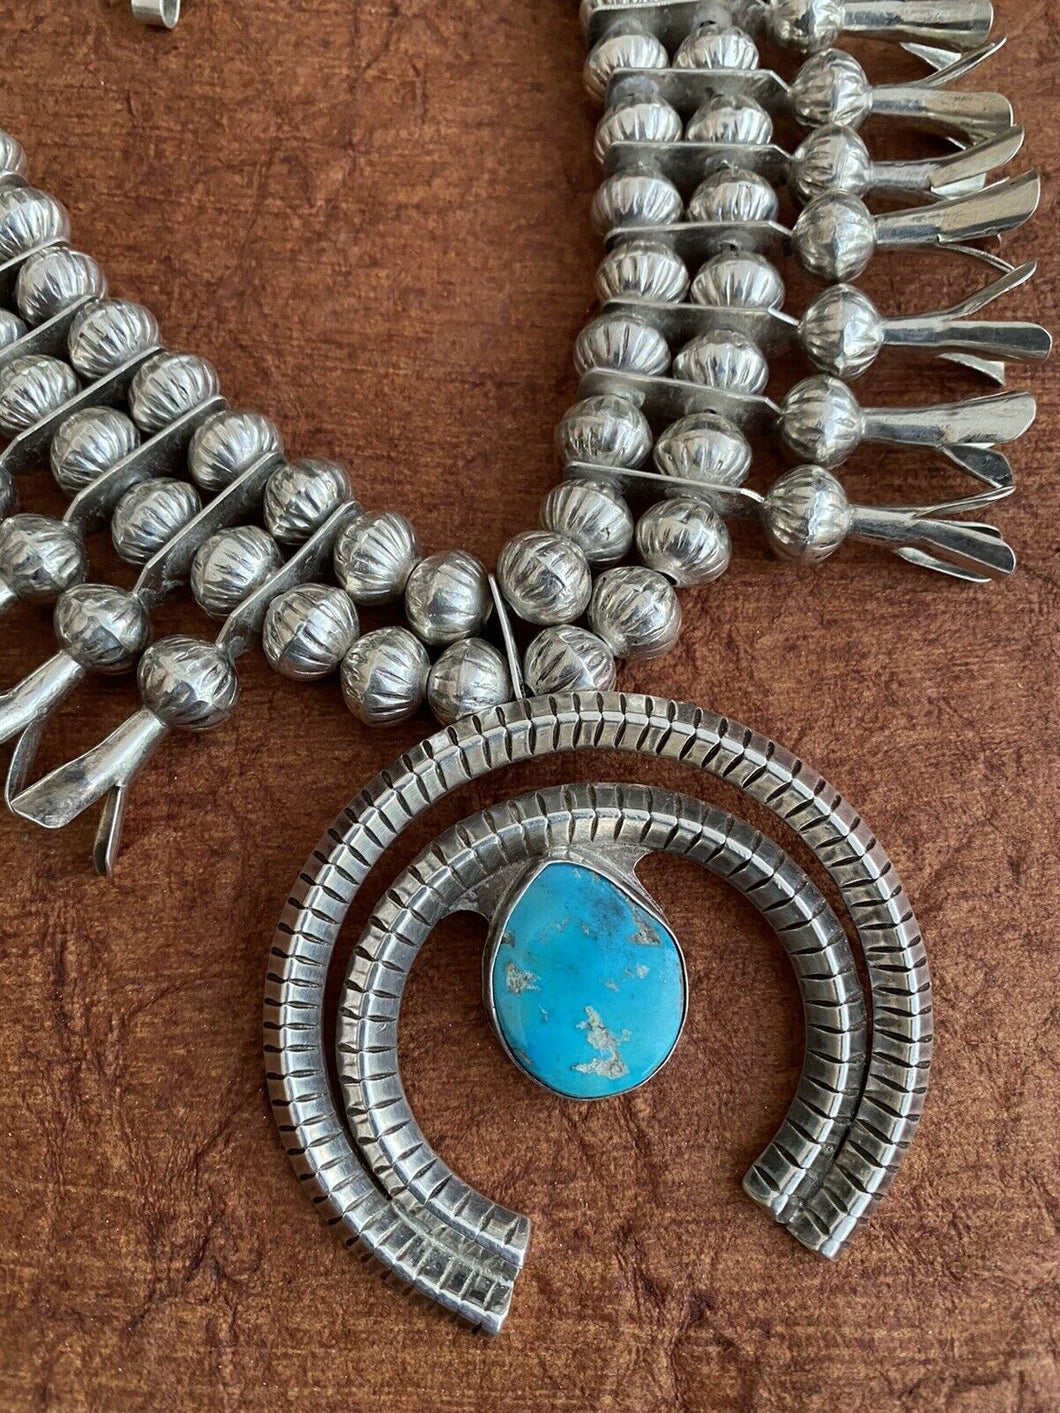 Vintage Navajo 1970’s Kingman Turquoise & Sterling Squash Blossom Necklace